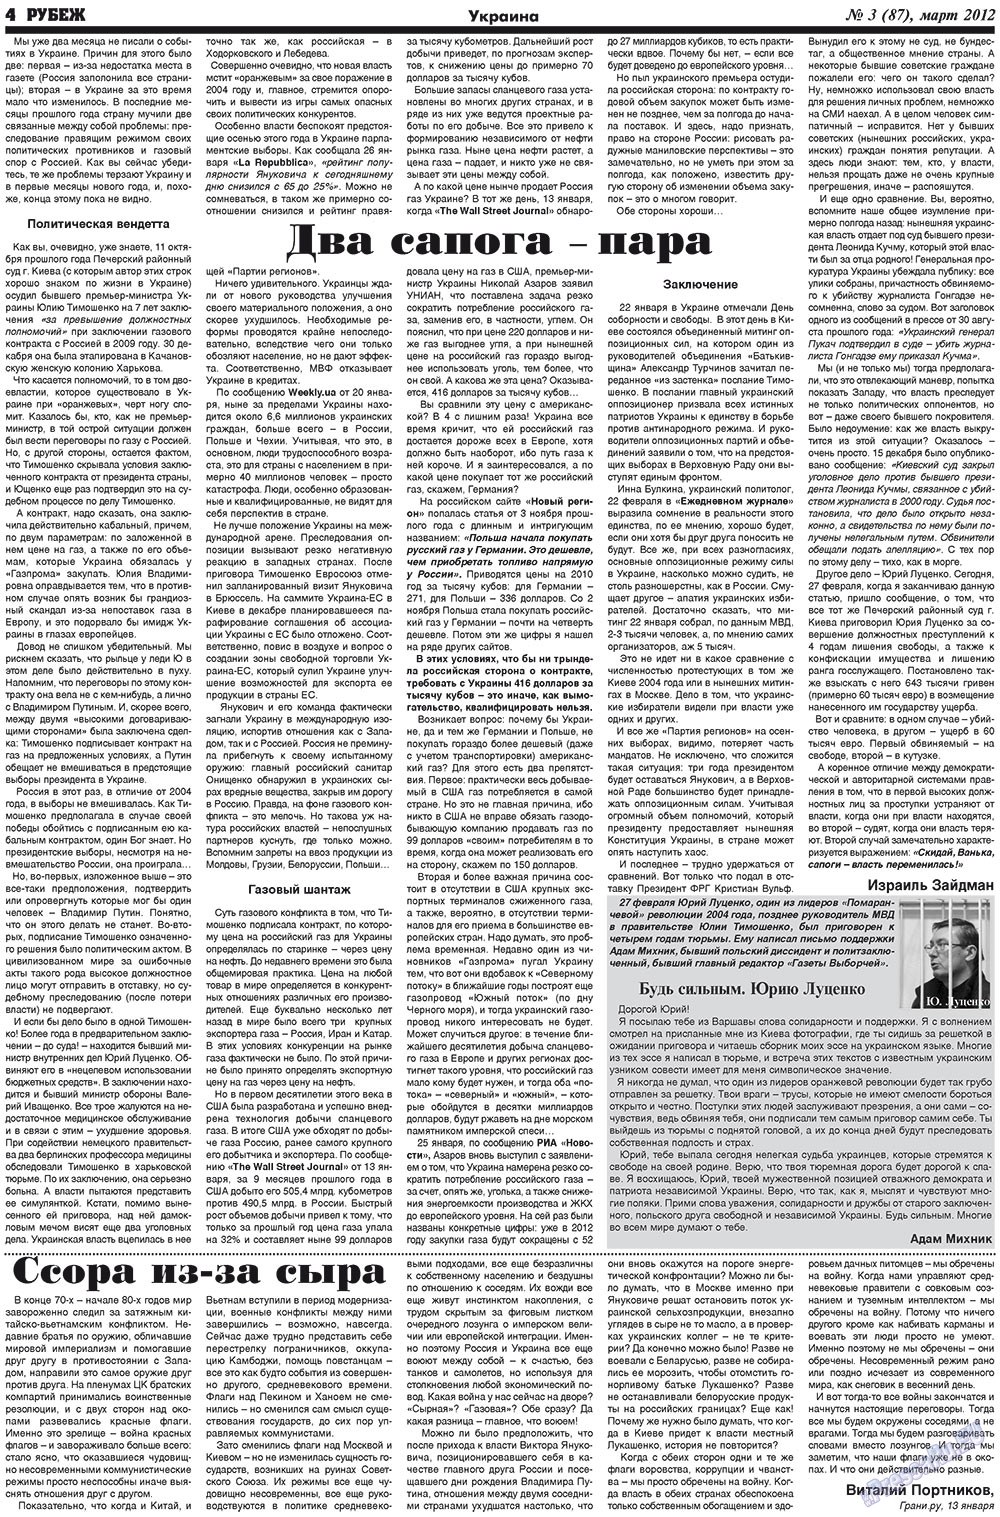 Рубеж, газета. 2012 №3 стр.4